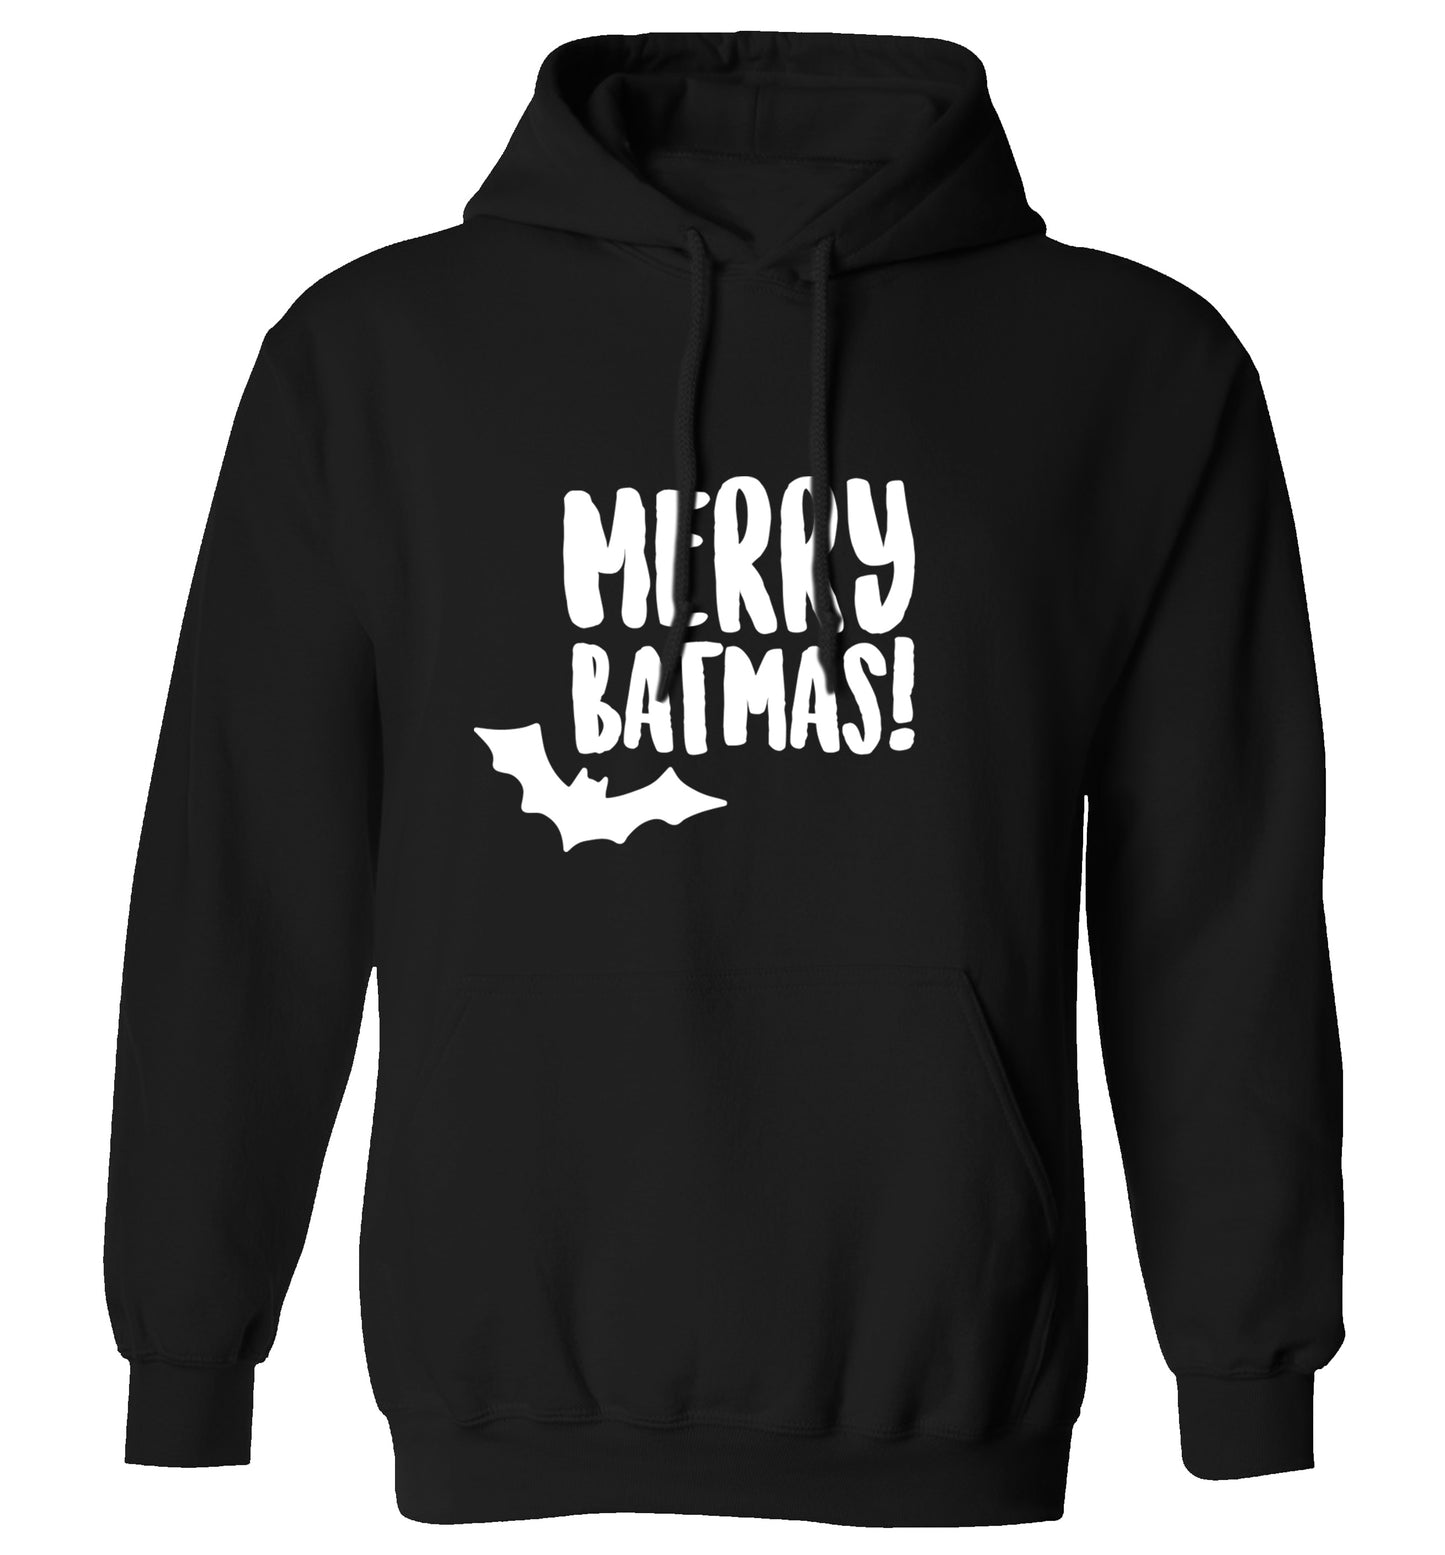 Merry Batmas adults unisex black hoodie 2XL